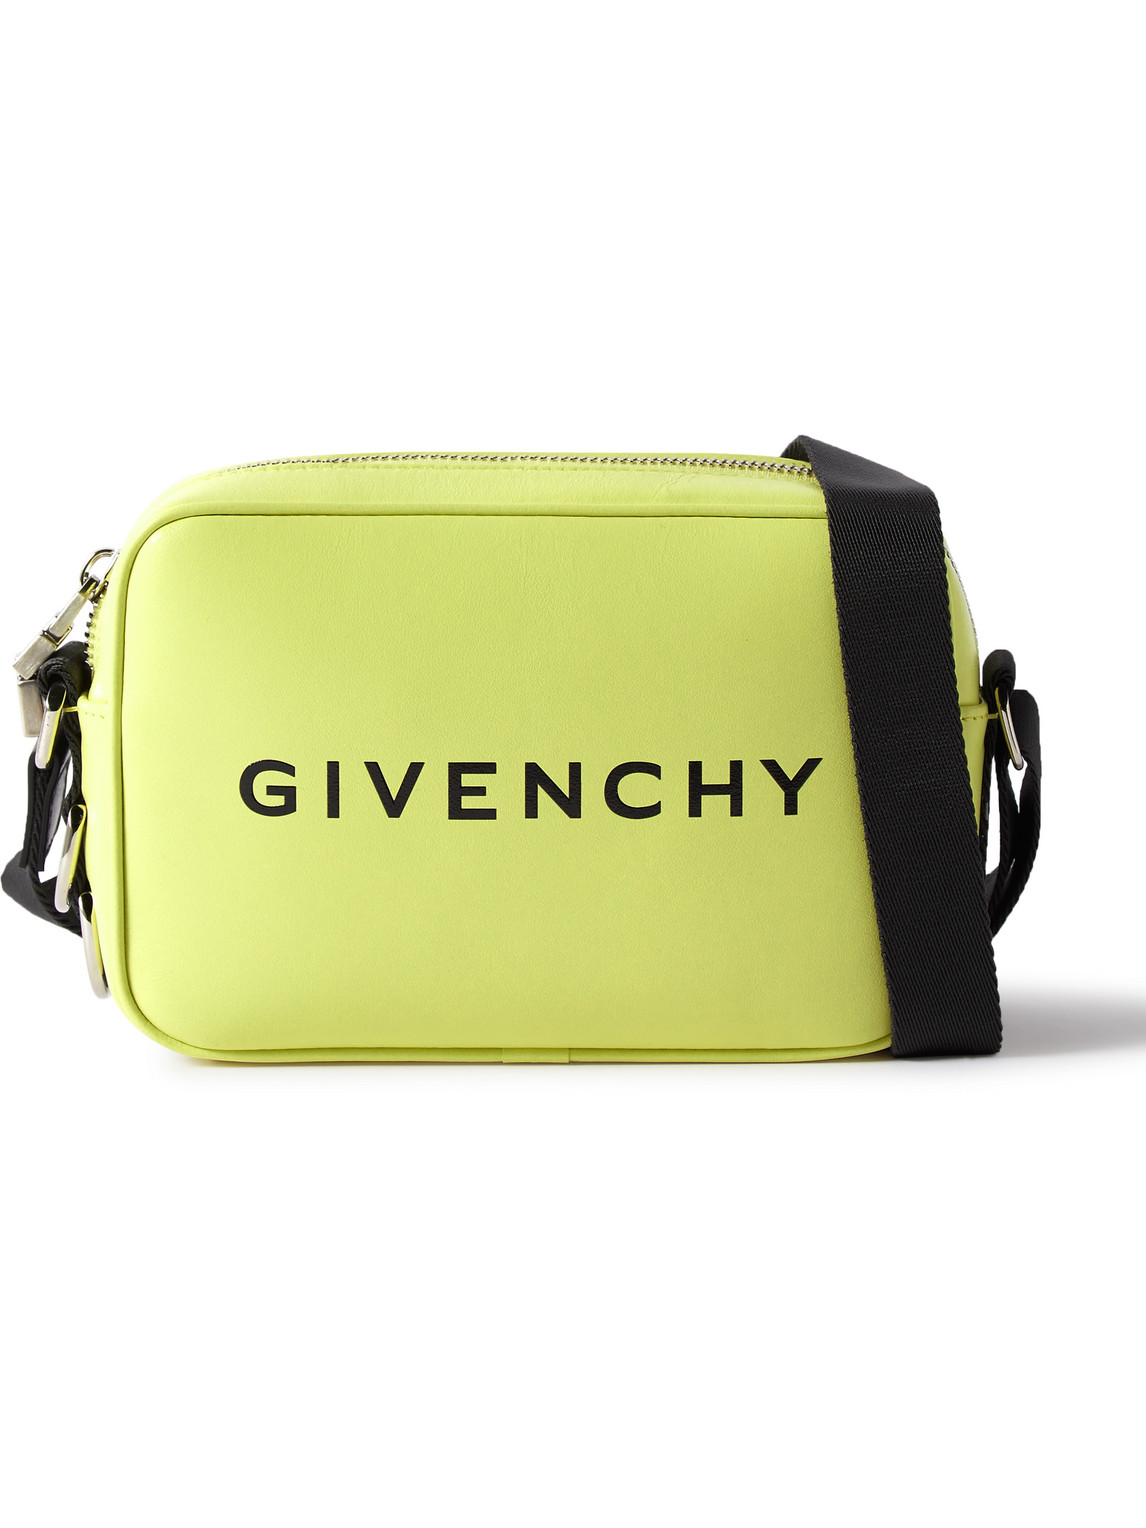 Givenchy - Logo-Print Leather Messenger Bag - Men - Yellow for Men